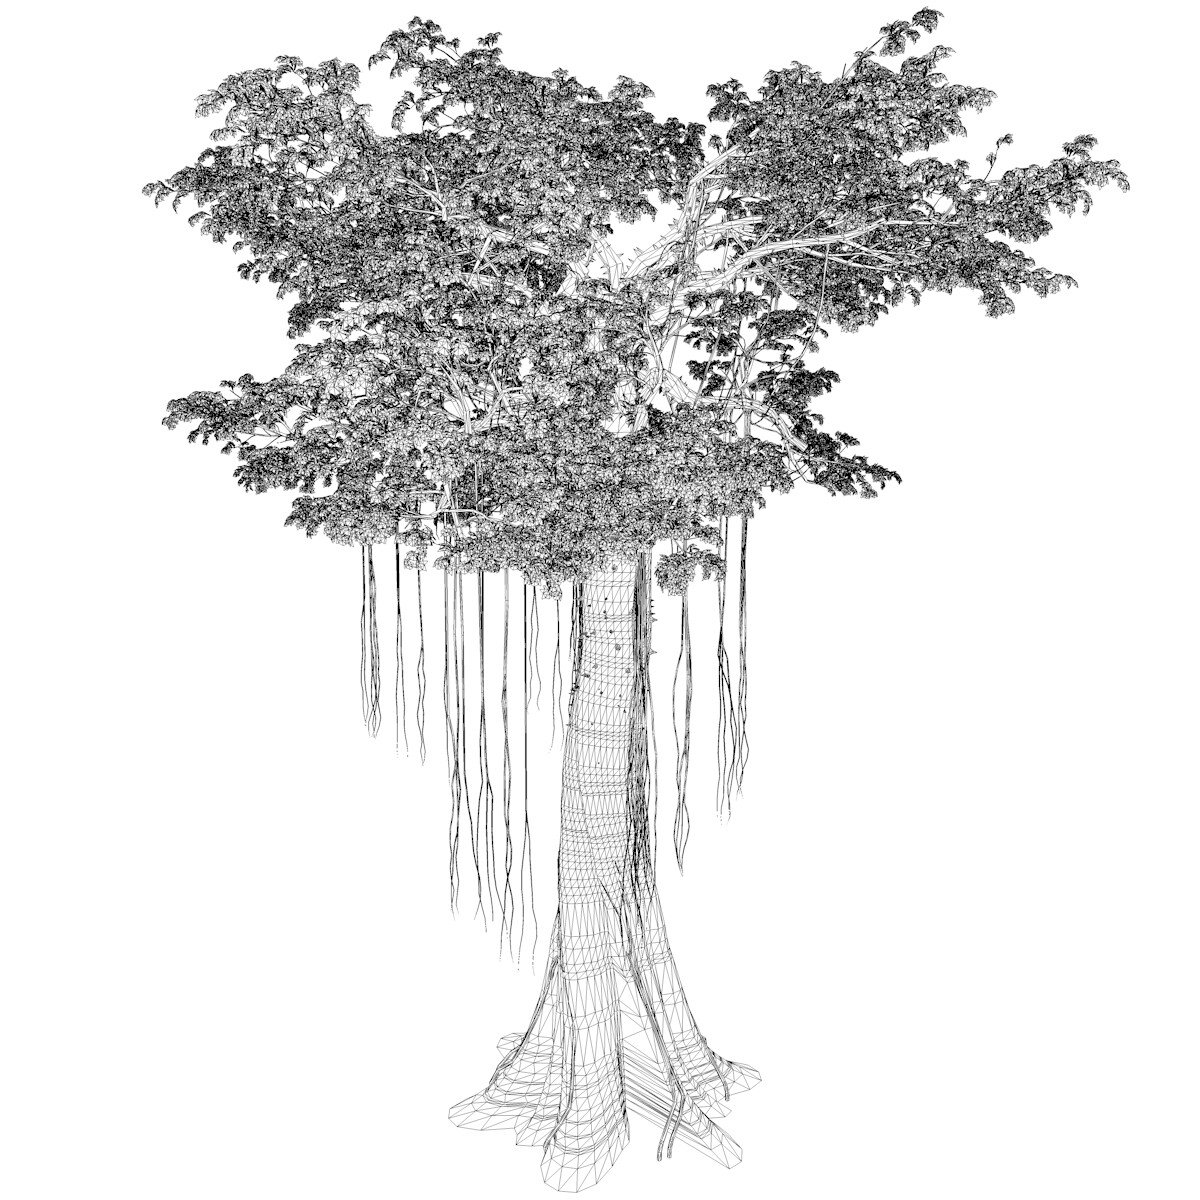 Kapok Tree #09 - 3D Model by AntonioKowatsch